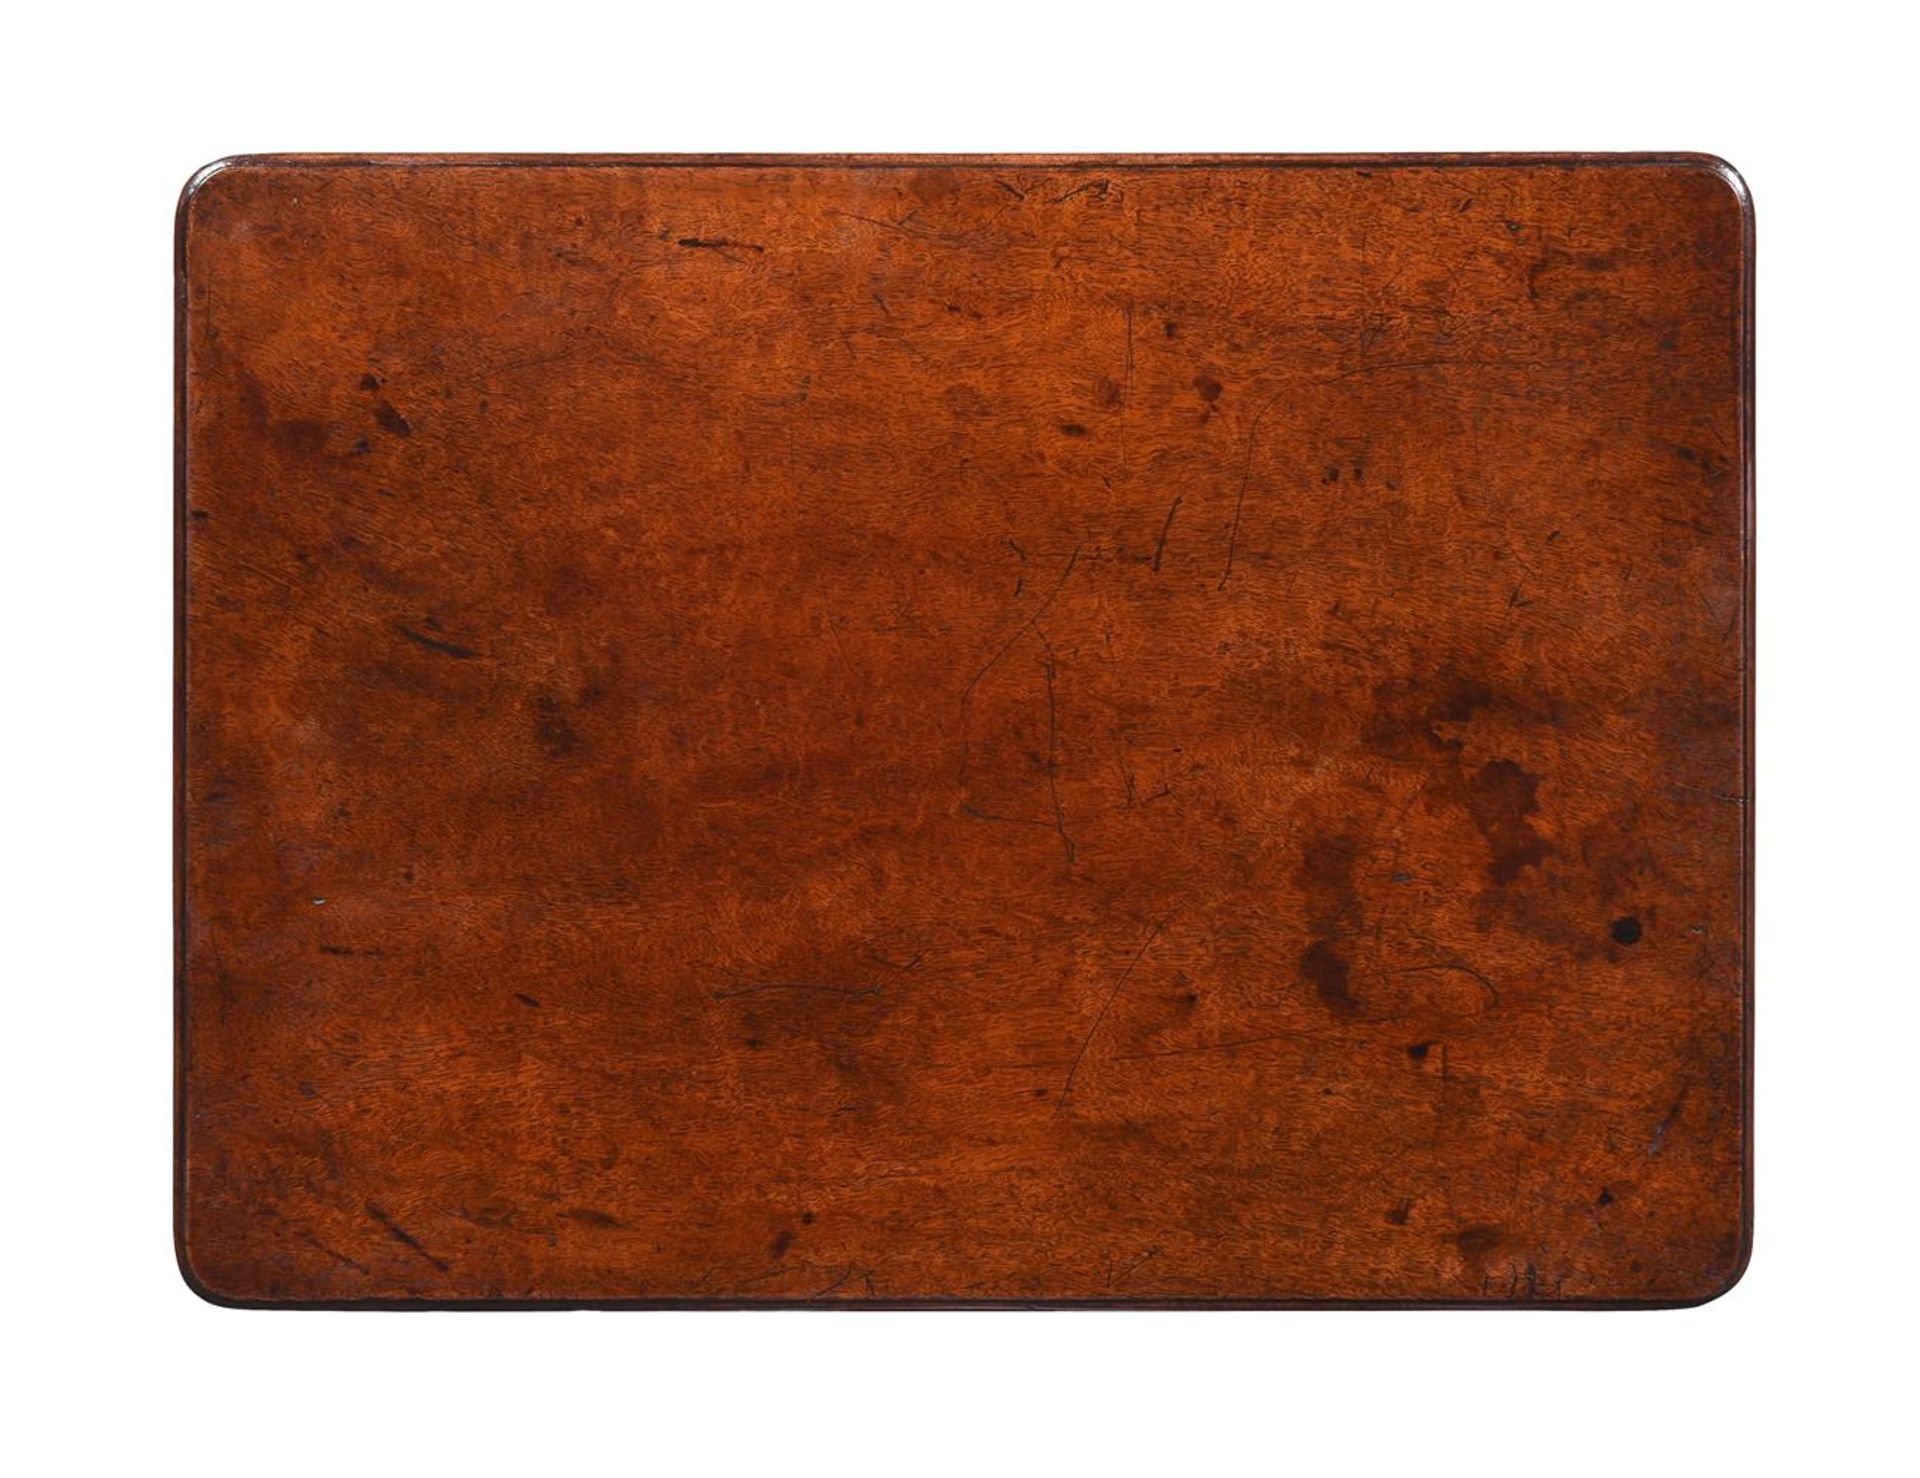 A GEORGE III MAHOGANY AND PLUM PUDDING MAHOGANY 'SPIDER LEG' TABLE, CIRCA 1800 - Image 2 of 3